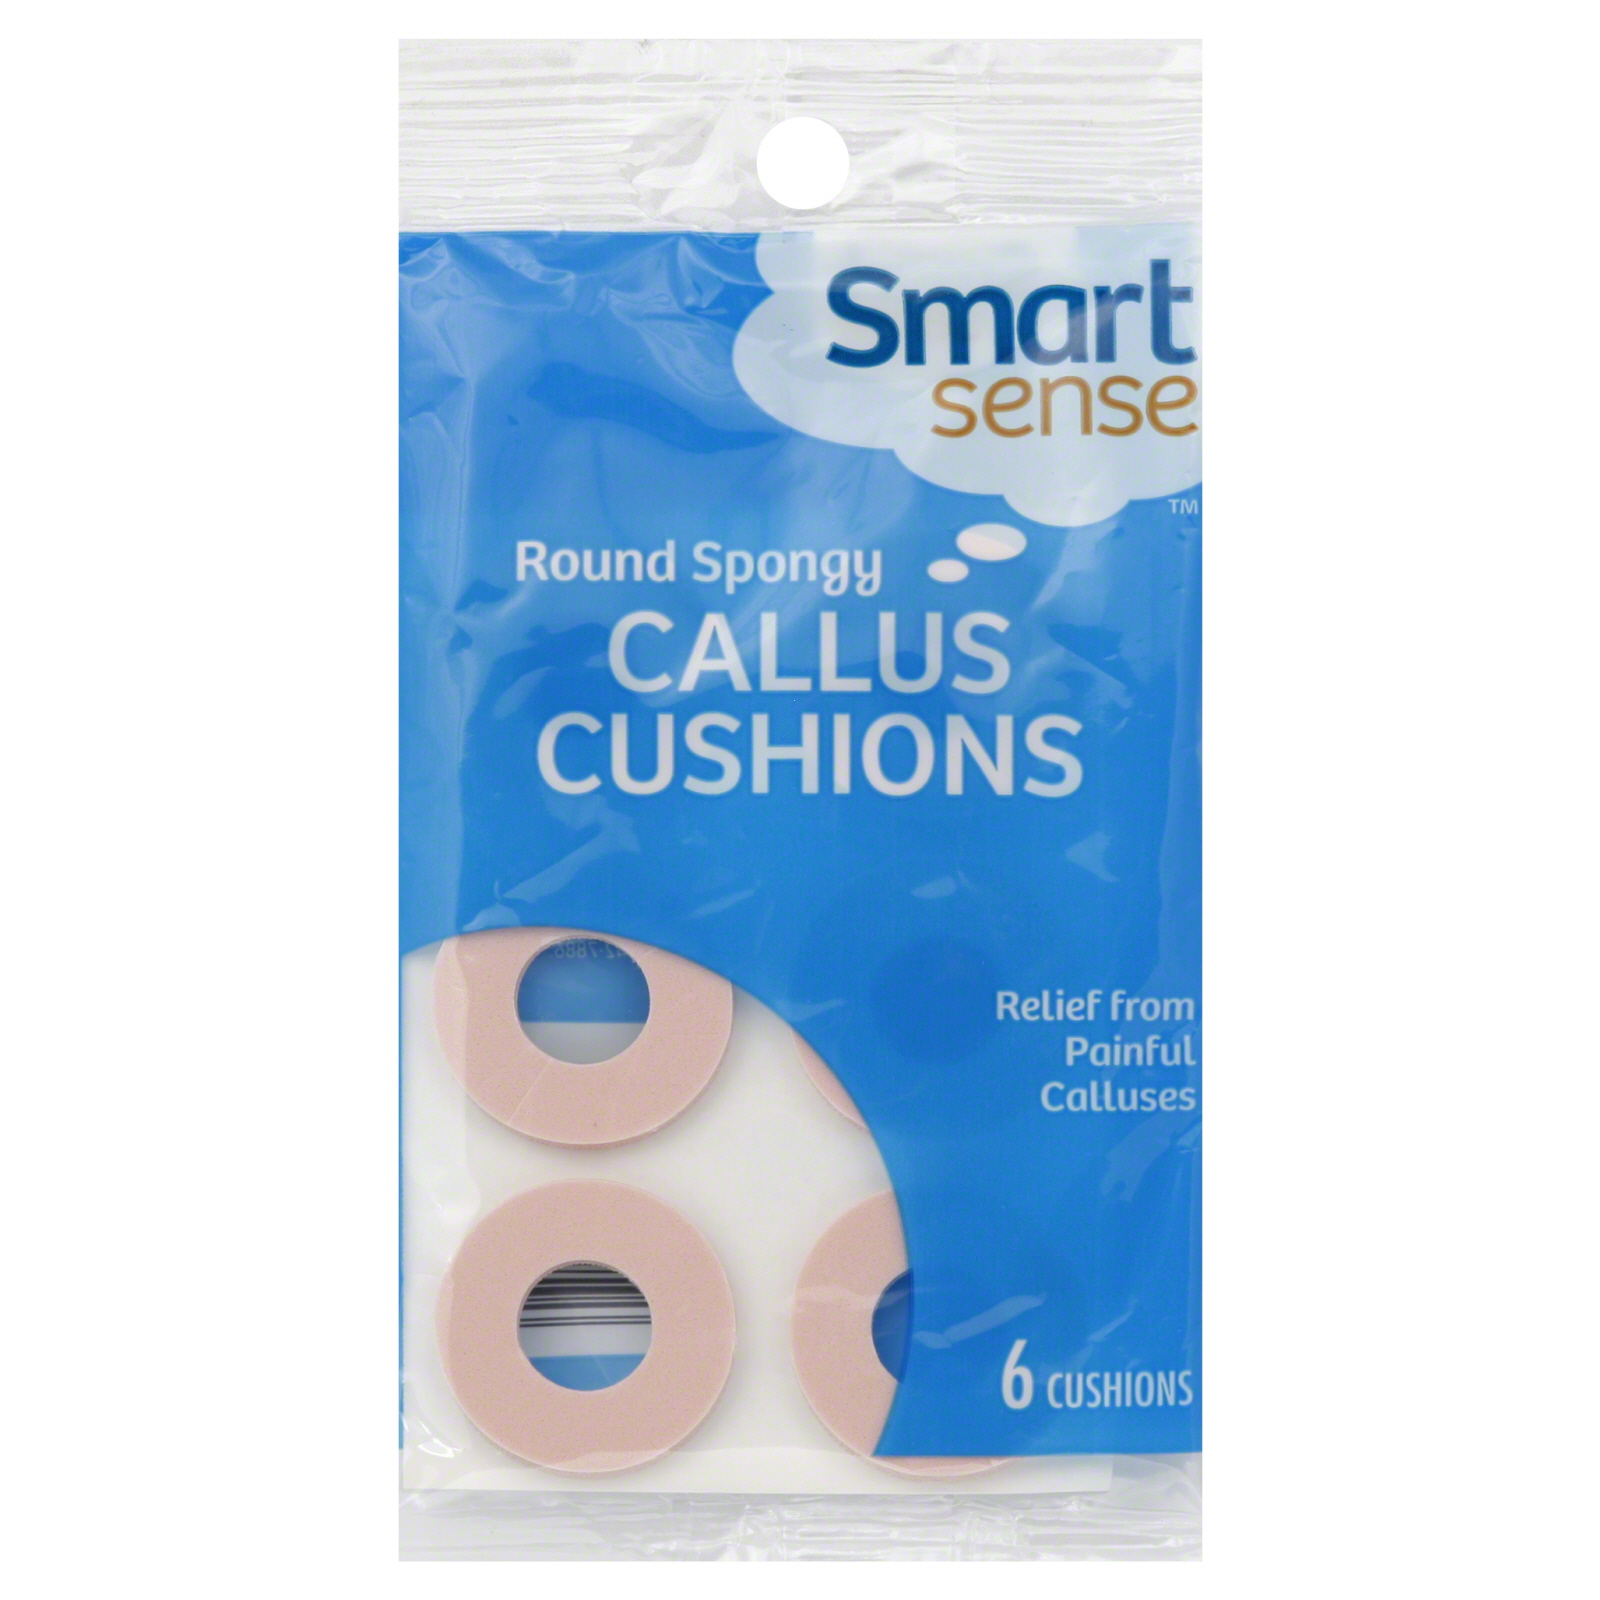 Smart Sense Callus Cushions, Round Spongy 6 cushions